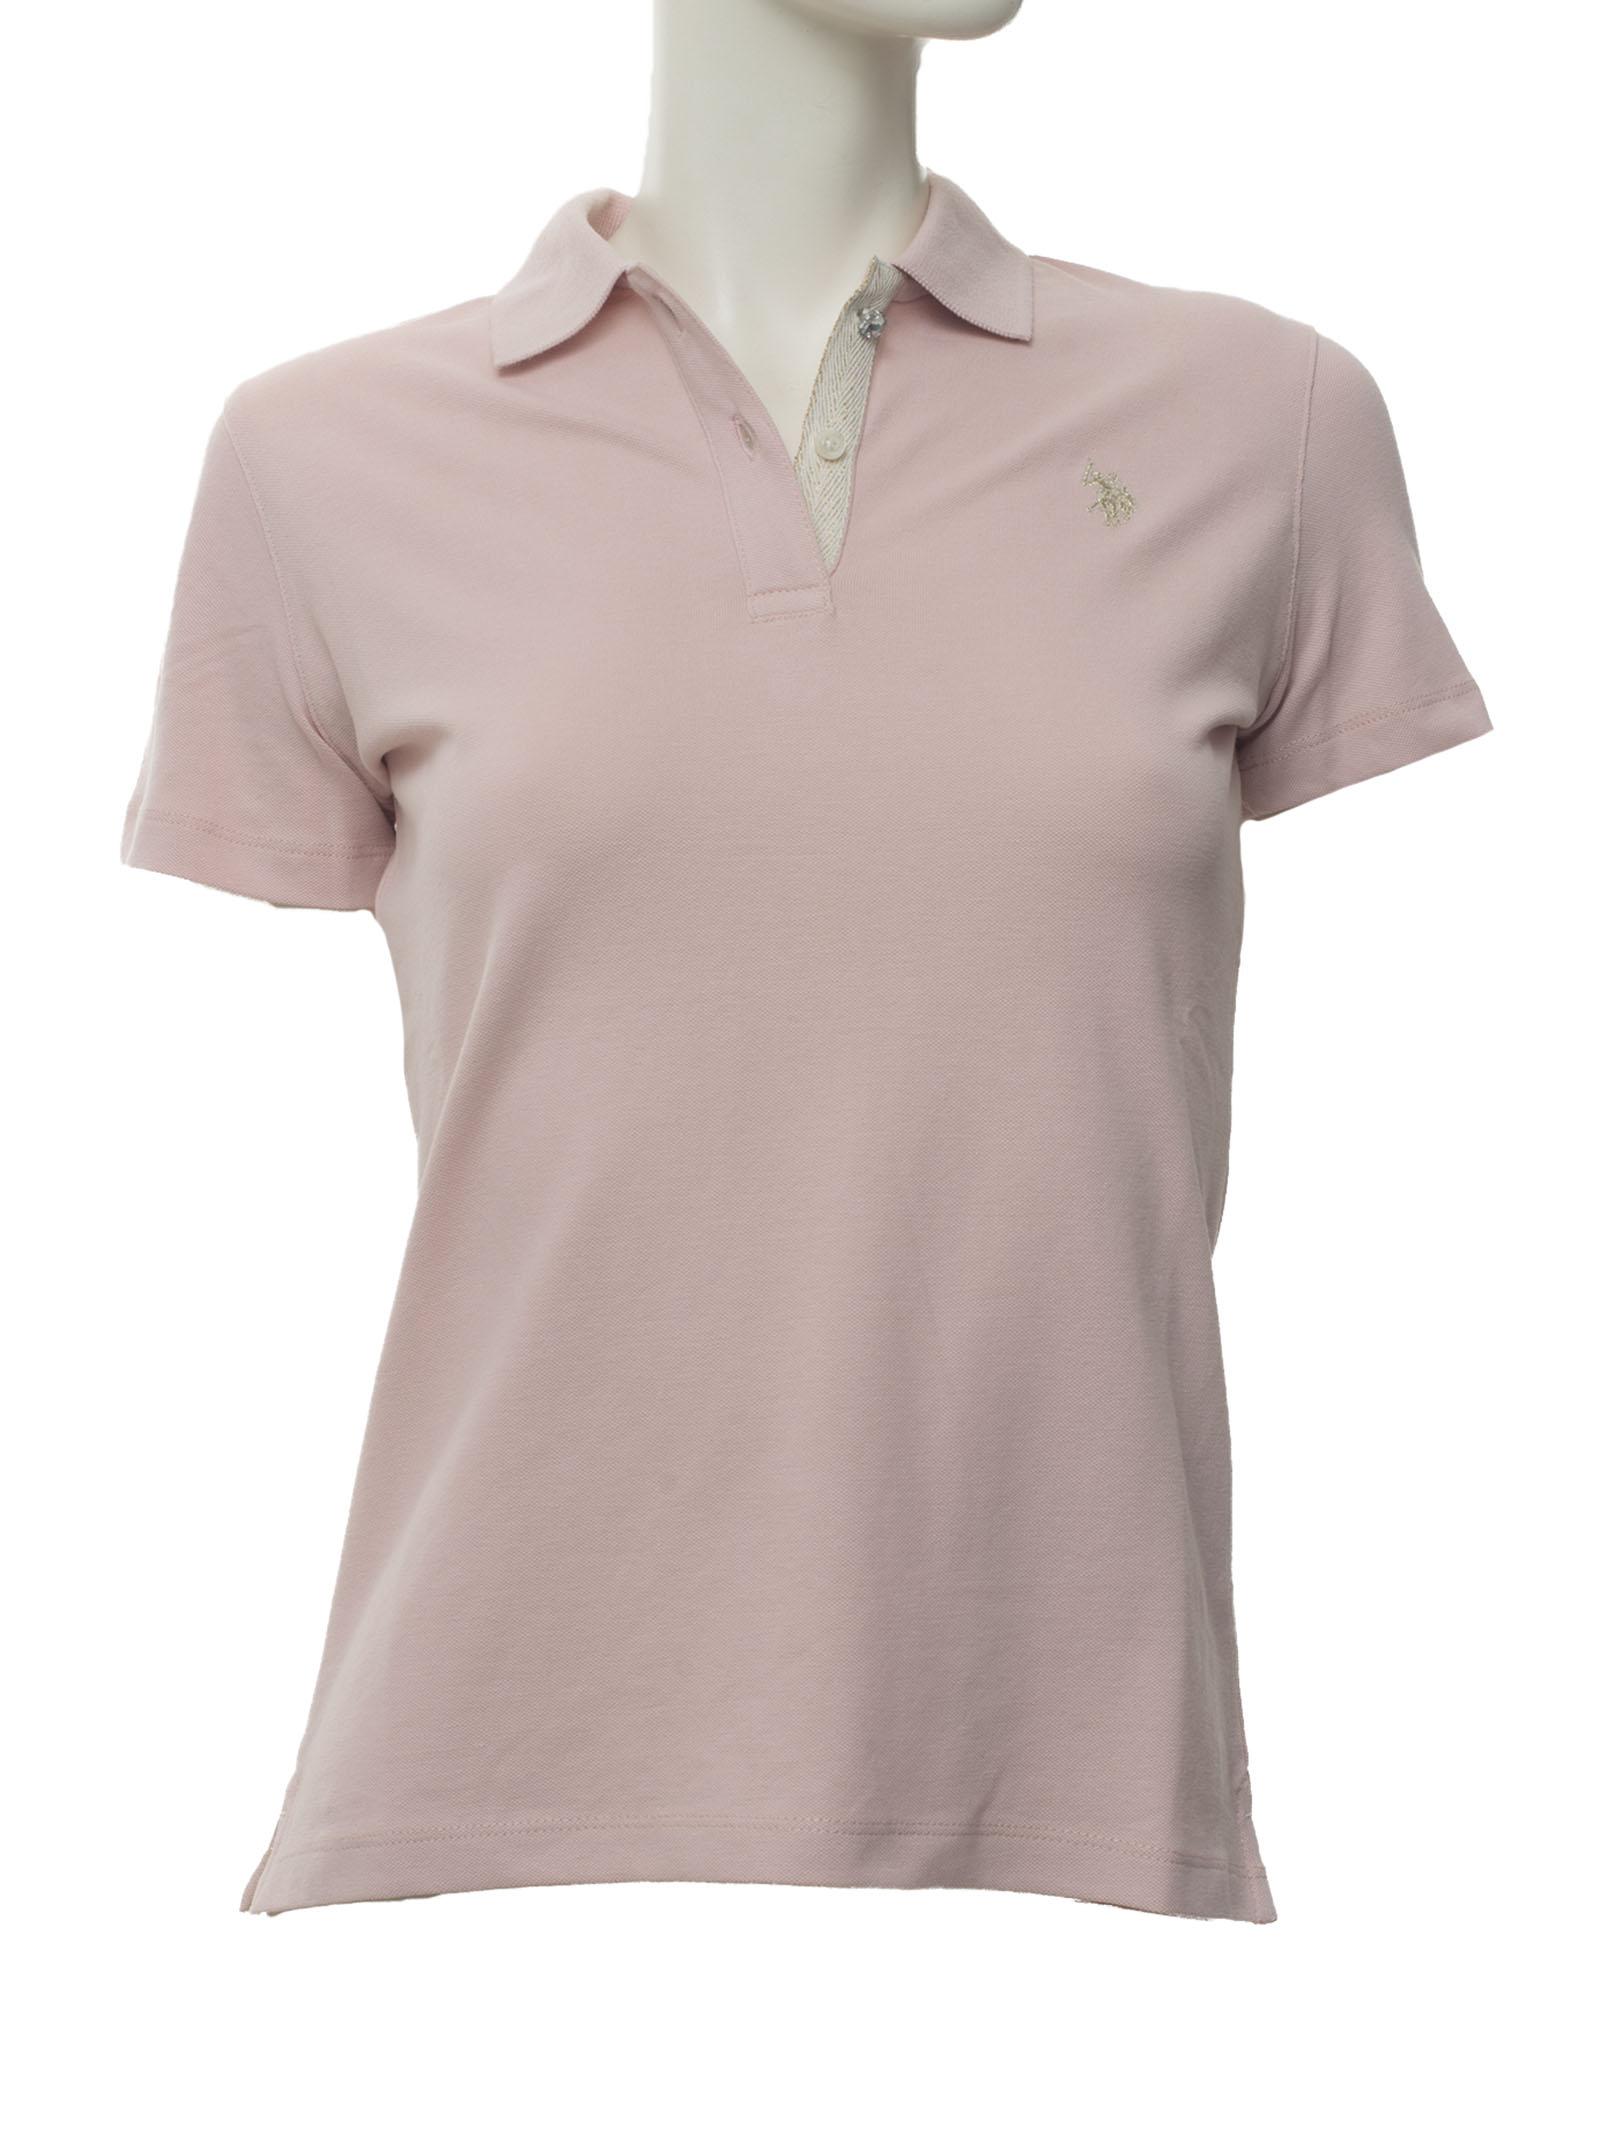 U.S. POLO ASSN. Short-sleeved Polo Shirt In Piquè Pink Cotton, Plain ...